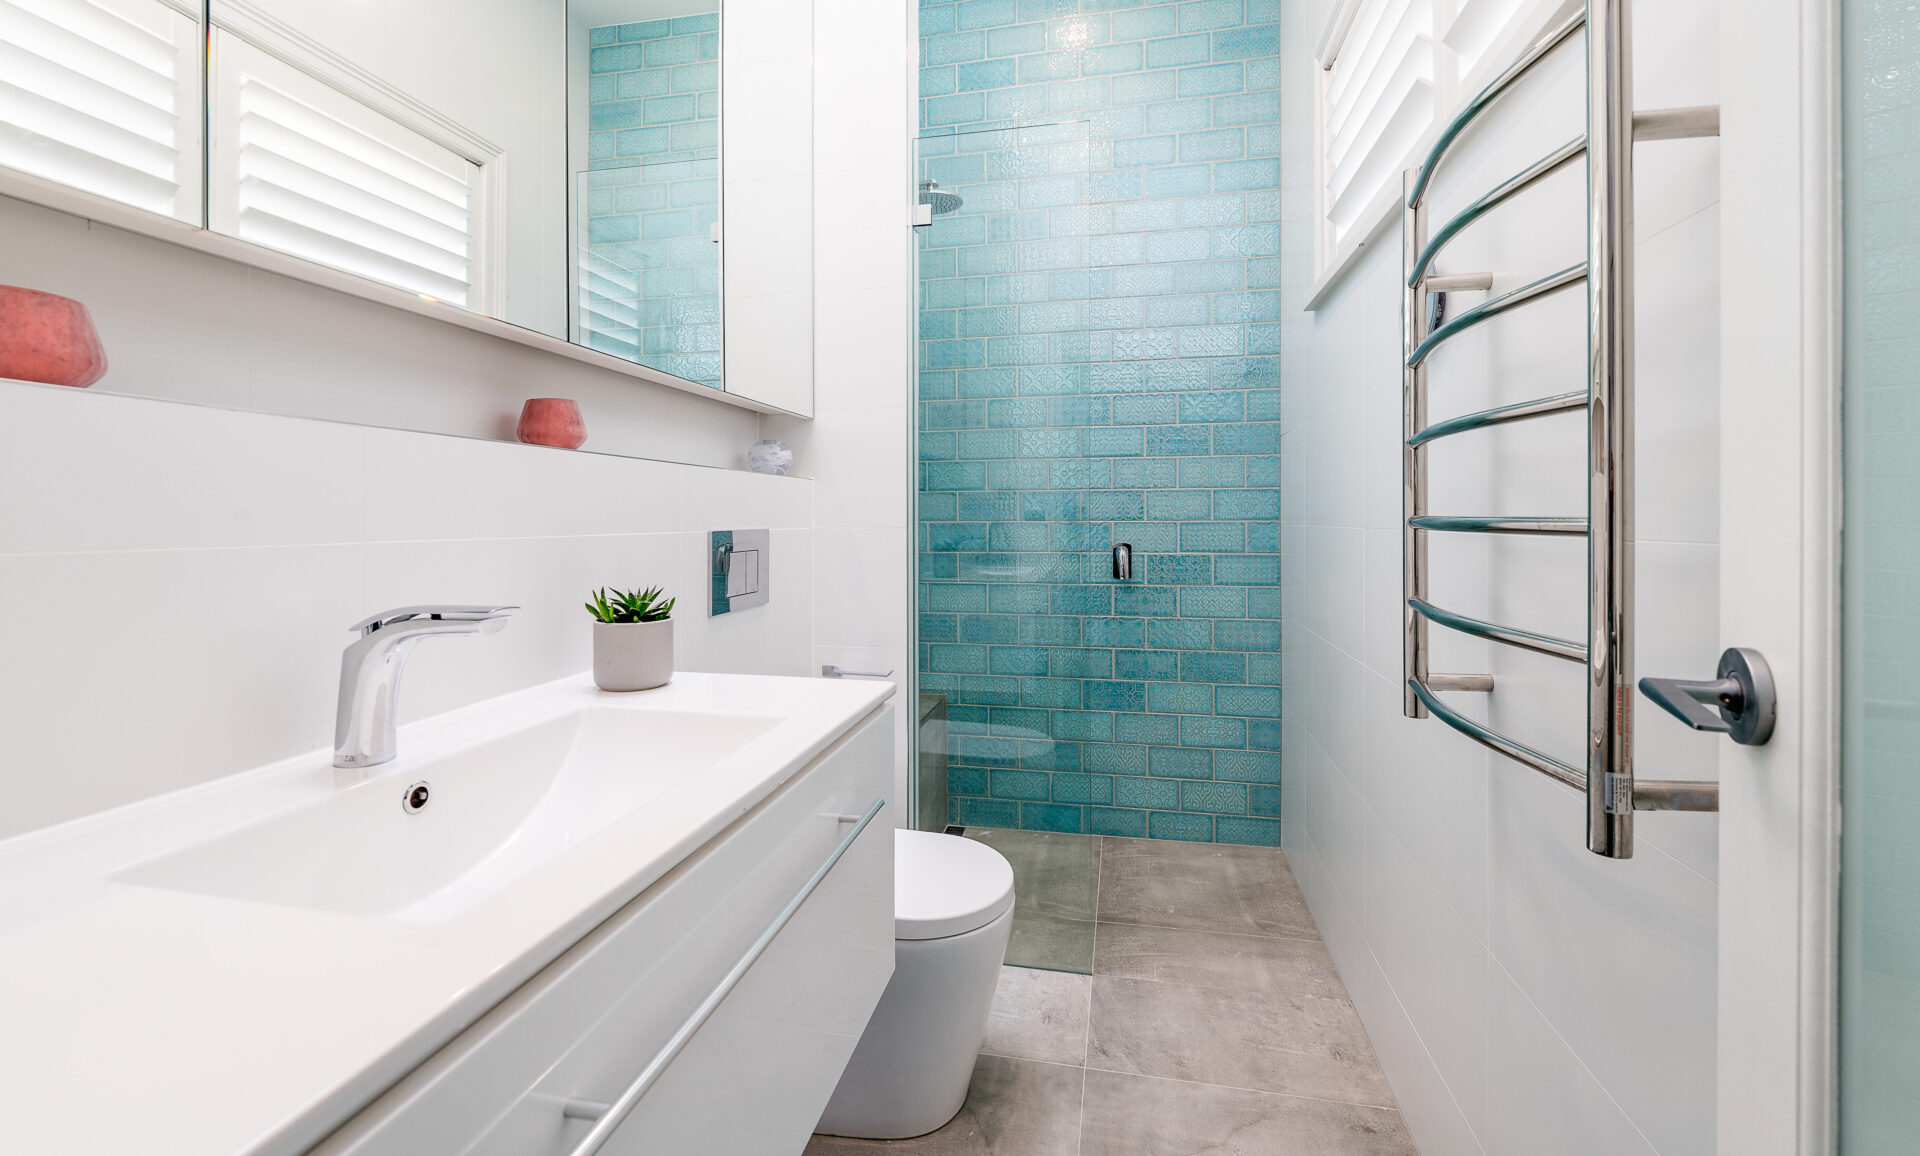 Inhaus Living - bathroom remodeling sydney